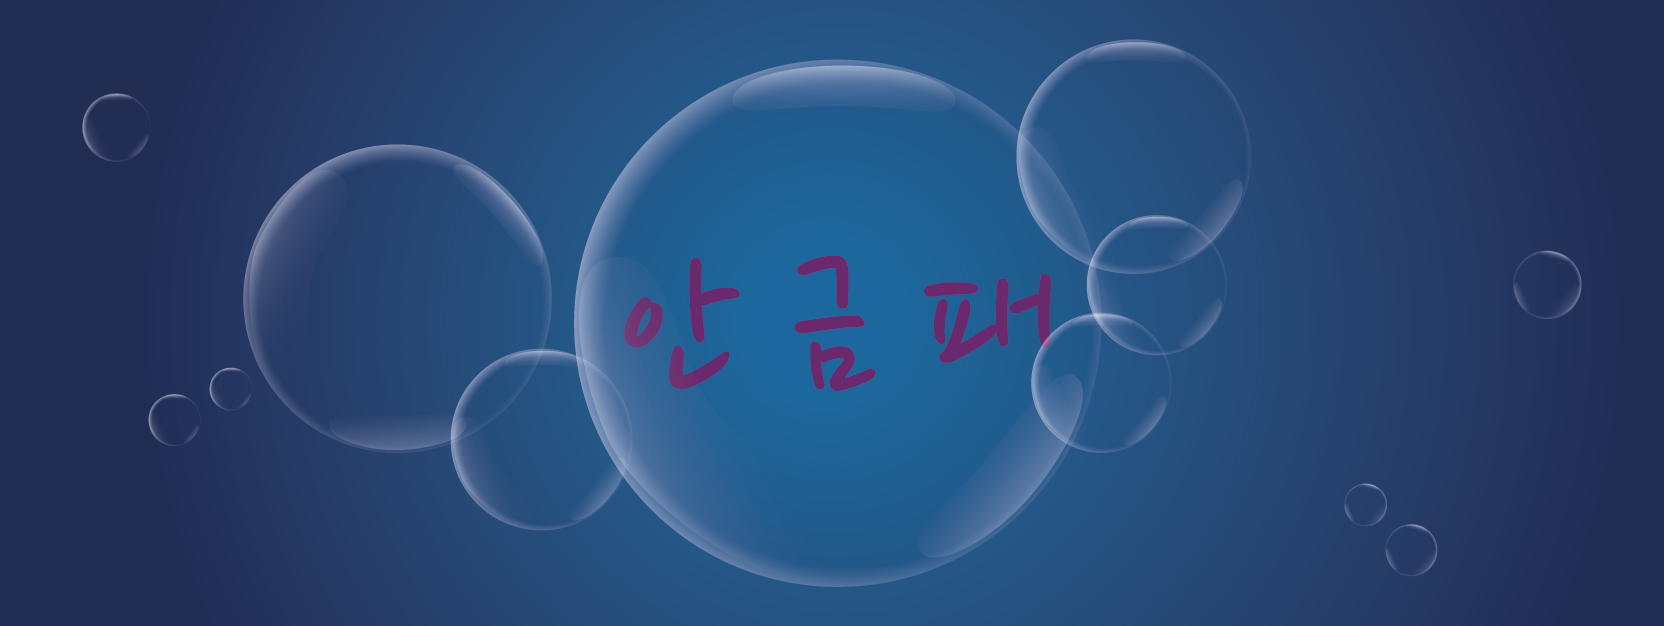 Korean Name_V1__Artboard 2